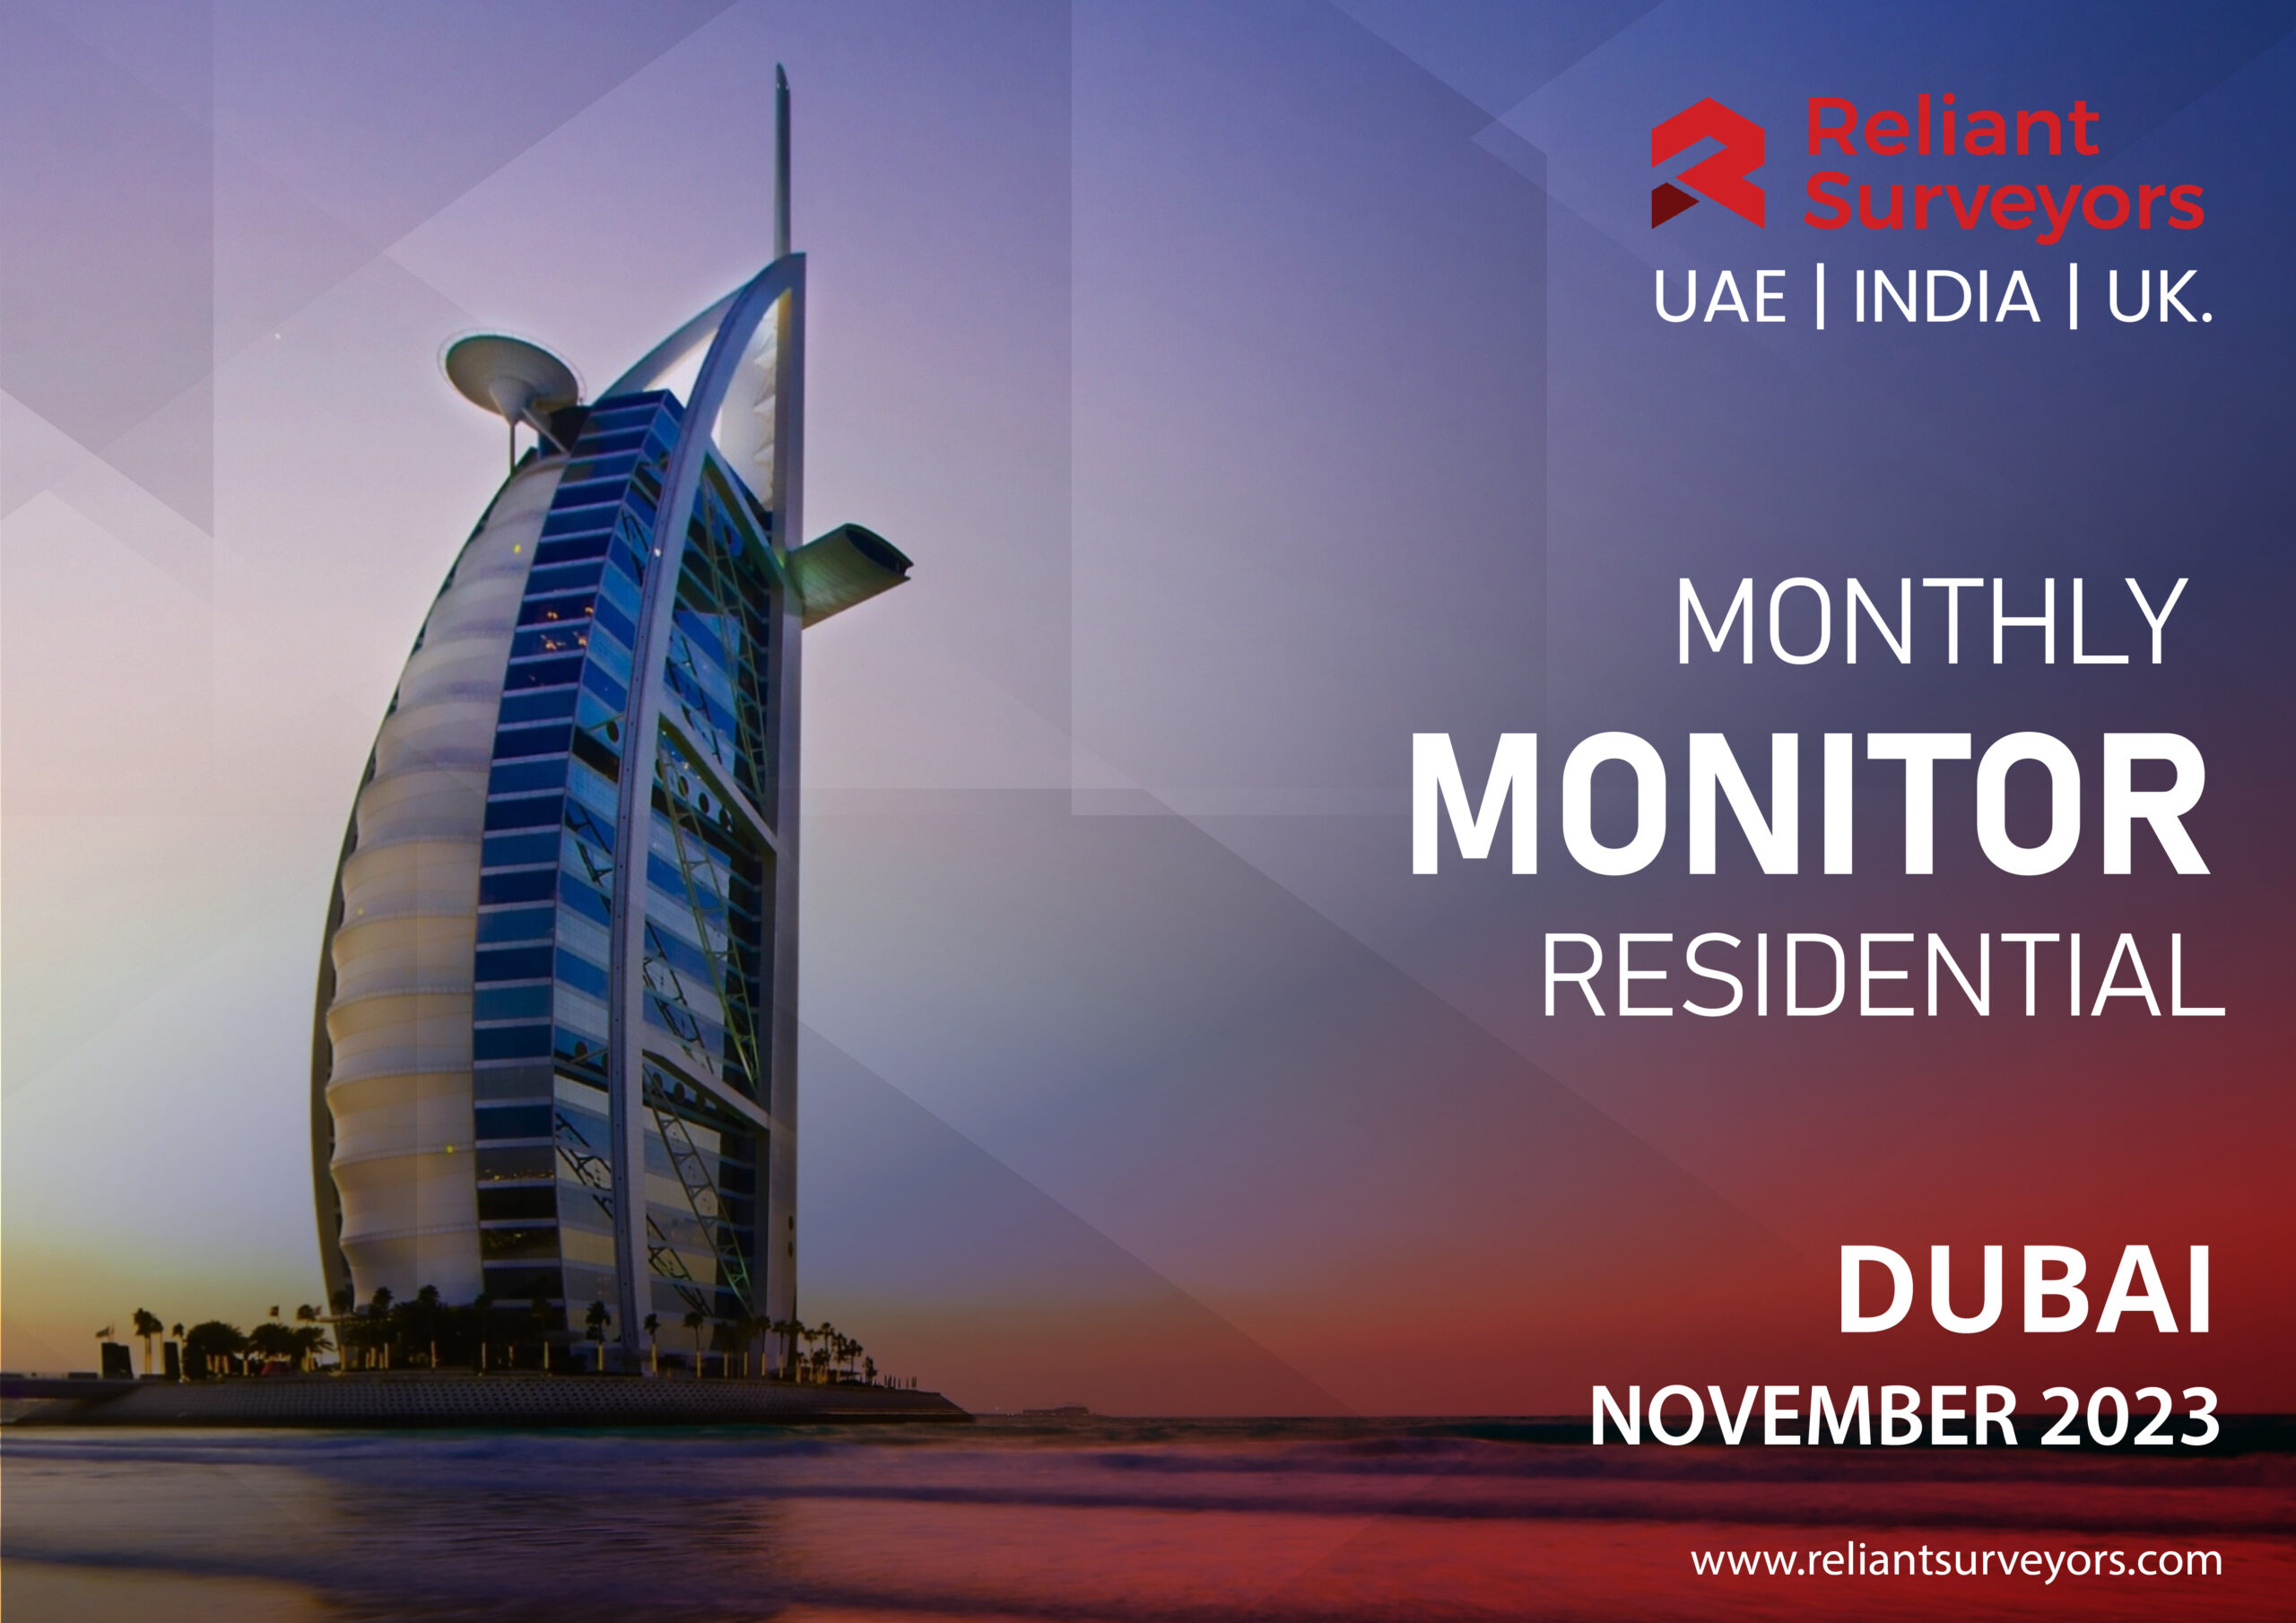 Dubai Residential Market report – Nomber 2023 By Reliant surveyors.